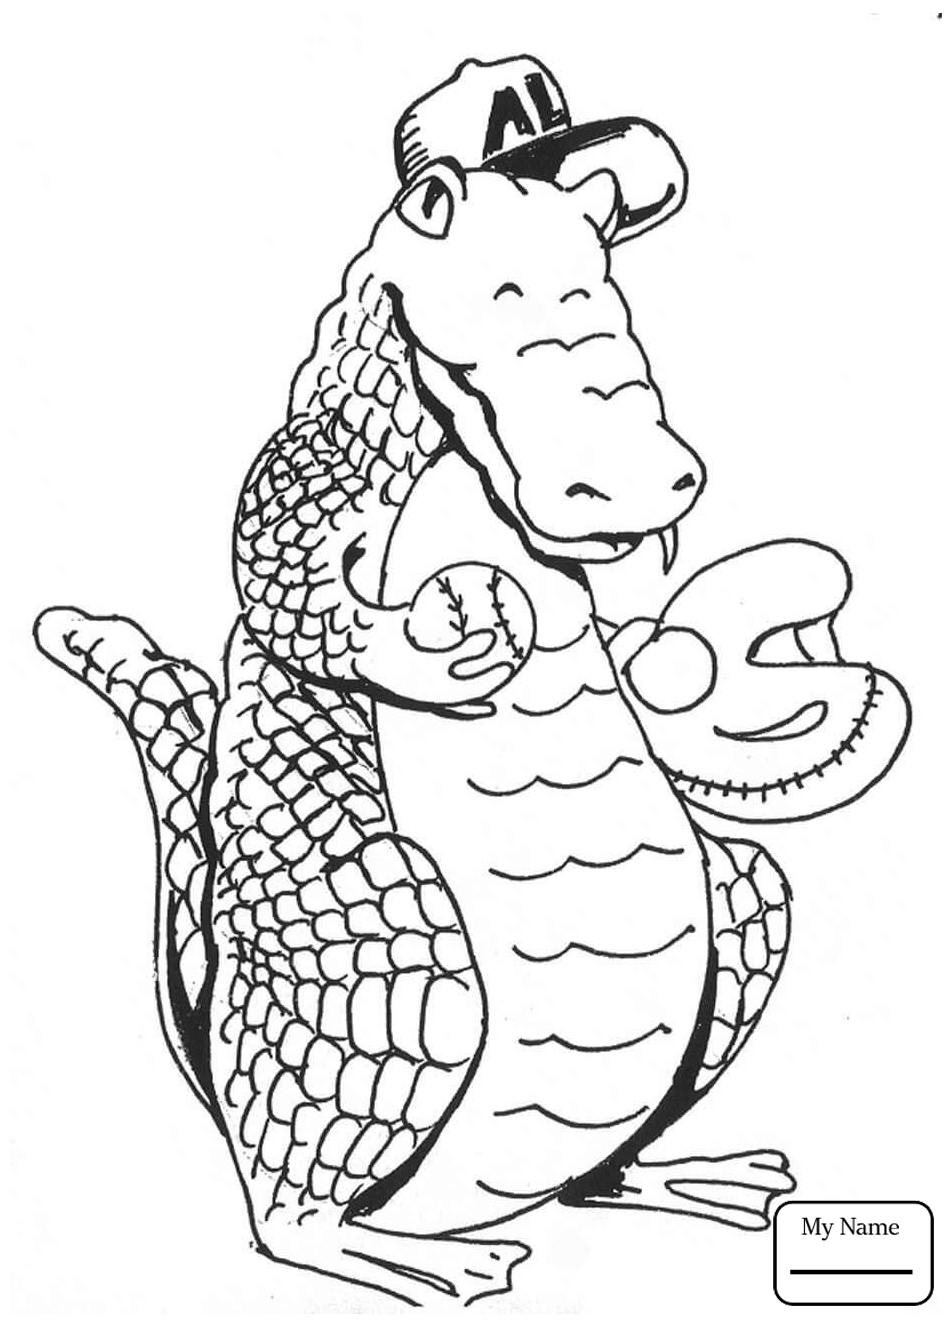 Alligator cartoon раскраска